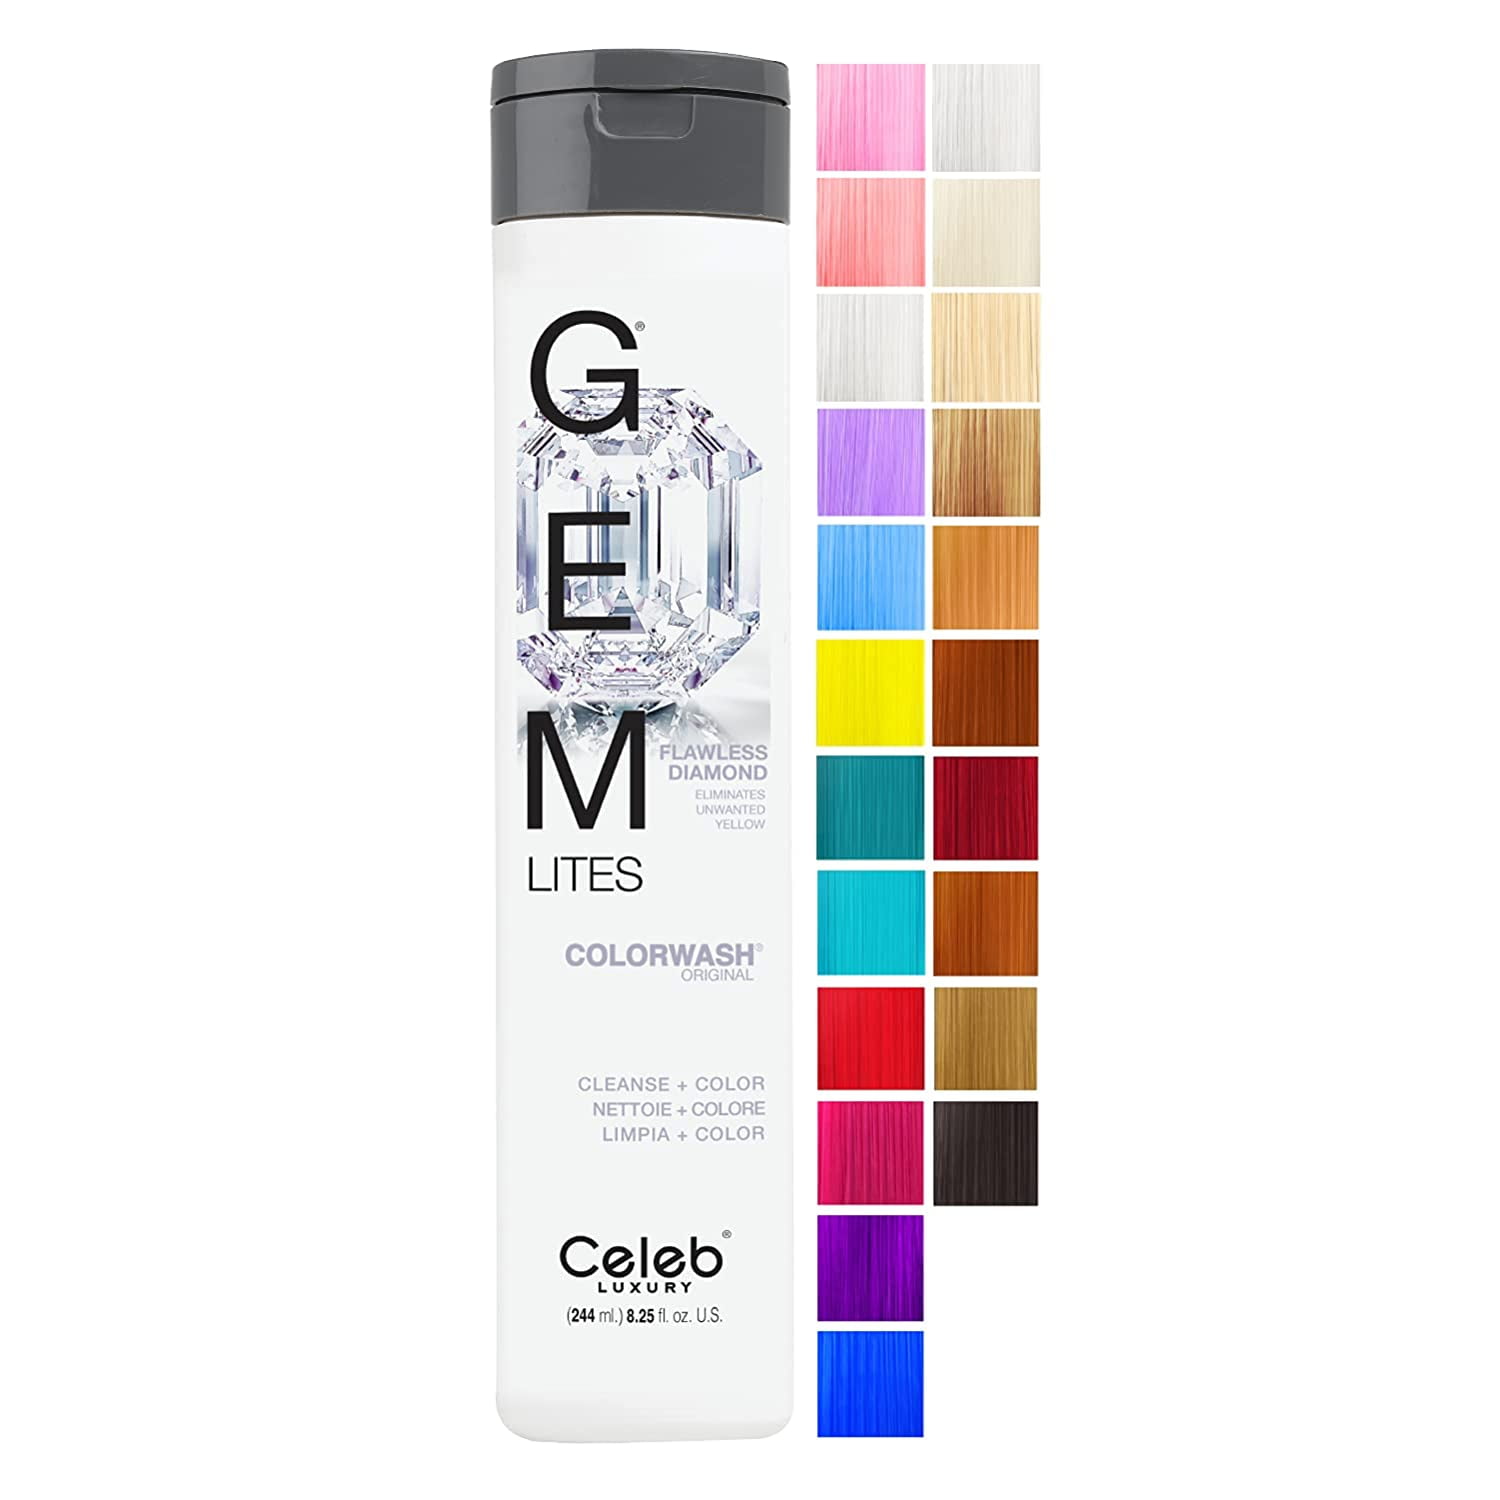 Celeb gem lights shampoo